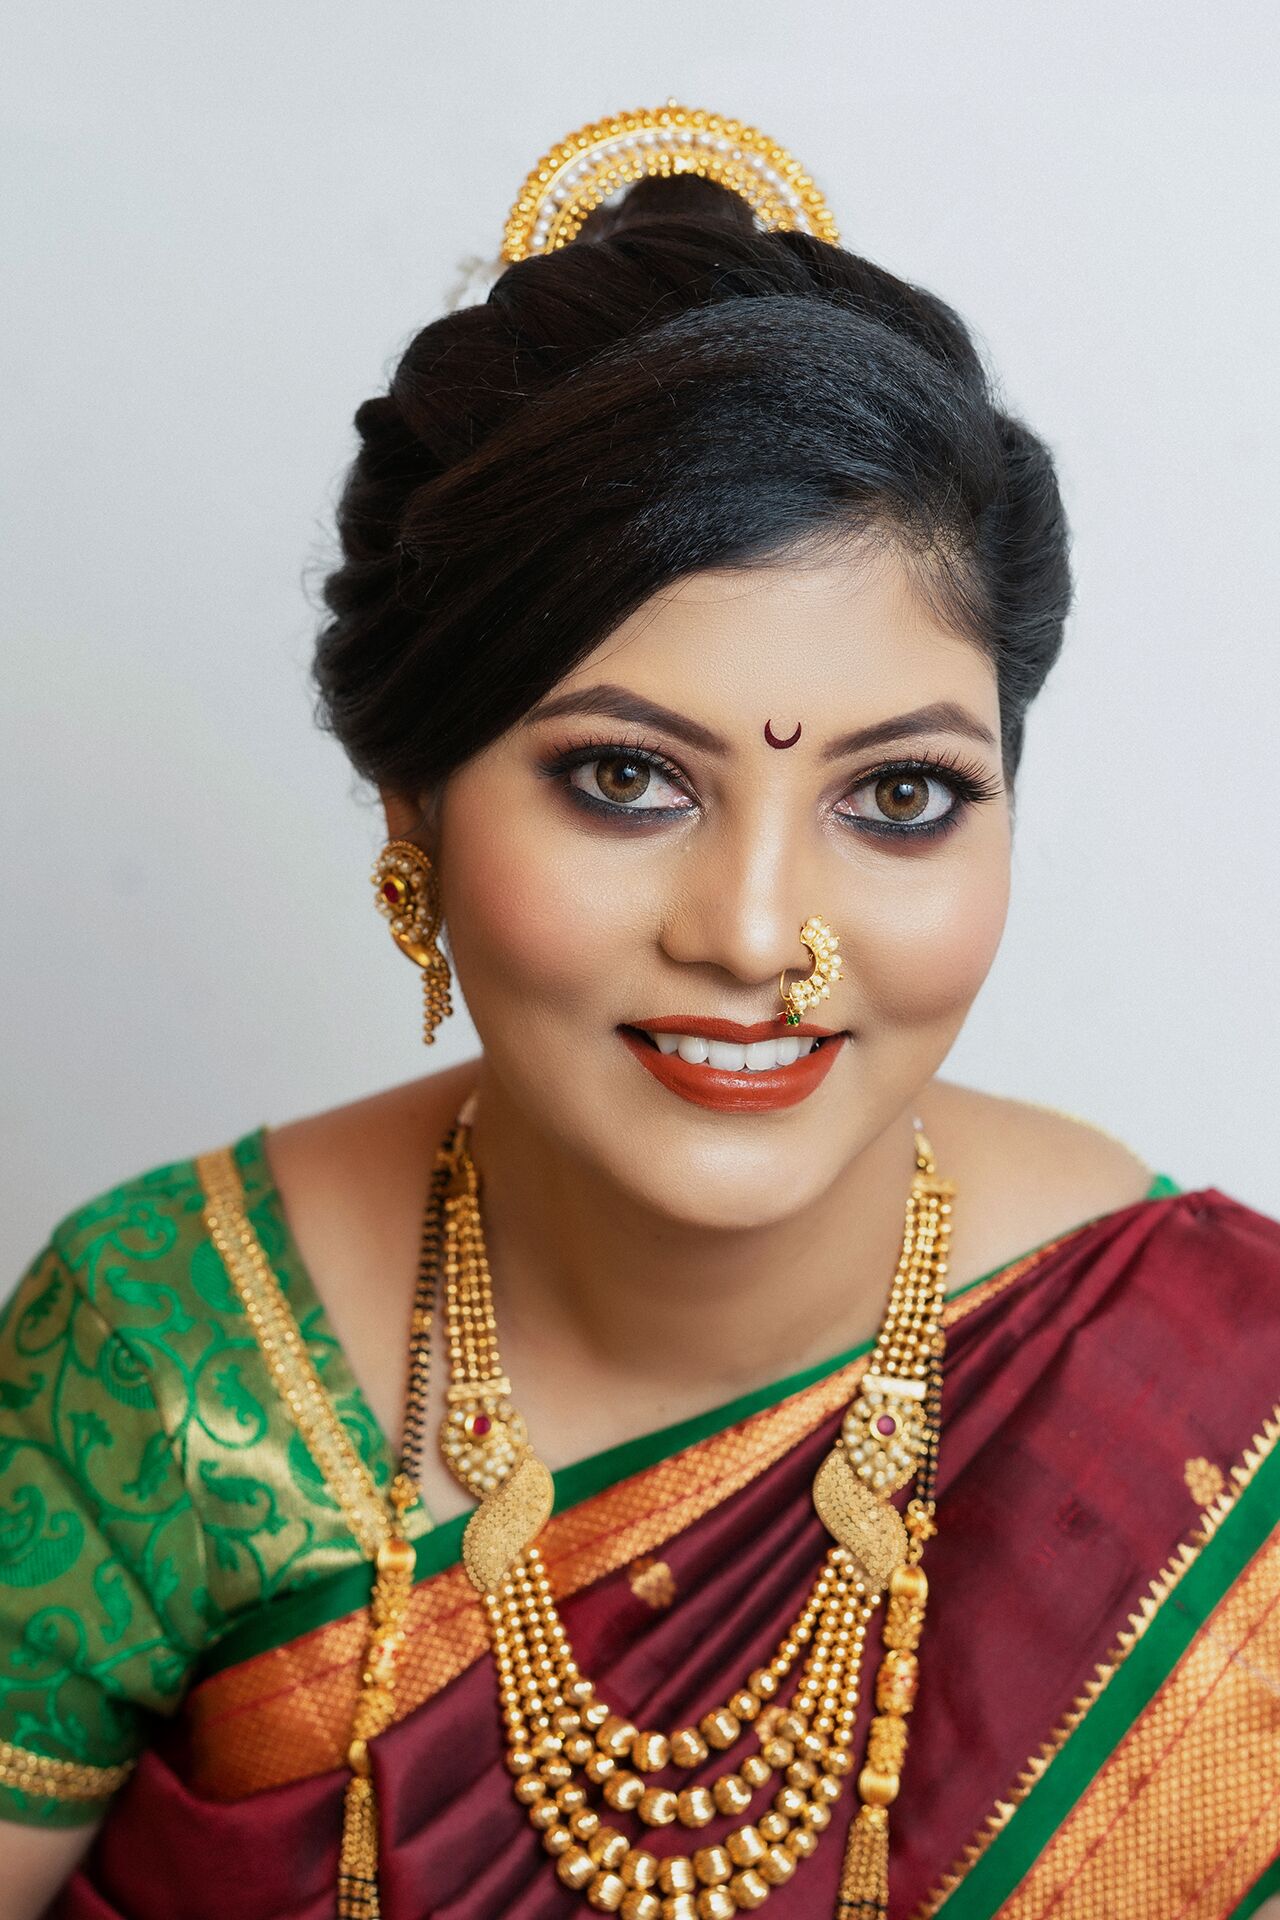 Buy Parna Traditional Gold Plated Pearl Diamond Maharashtrian Nath  (Taar/Pierced) Nose Ring Marathi Wedding Jewellery Bridal Banu Nath For  Women Girls at Amazon.in